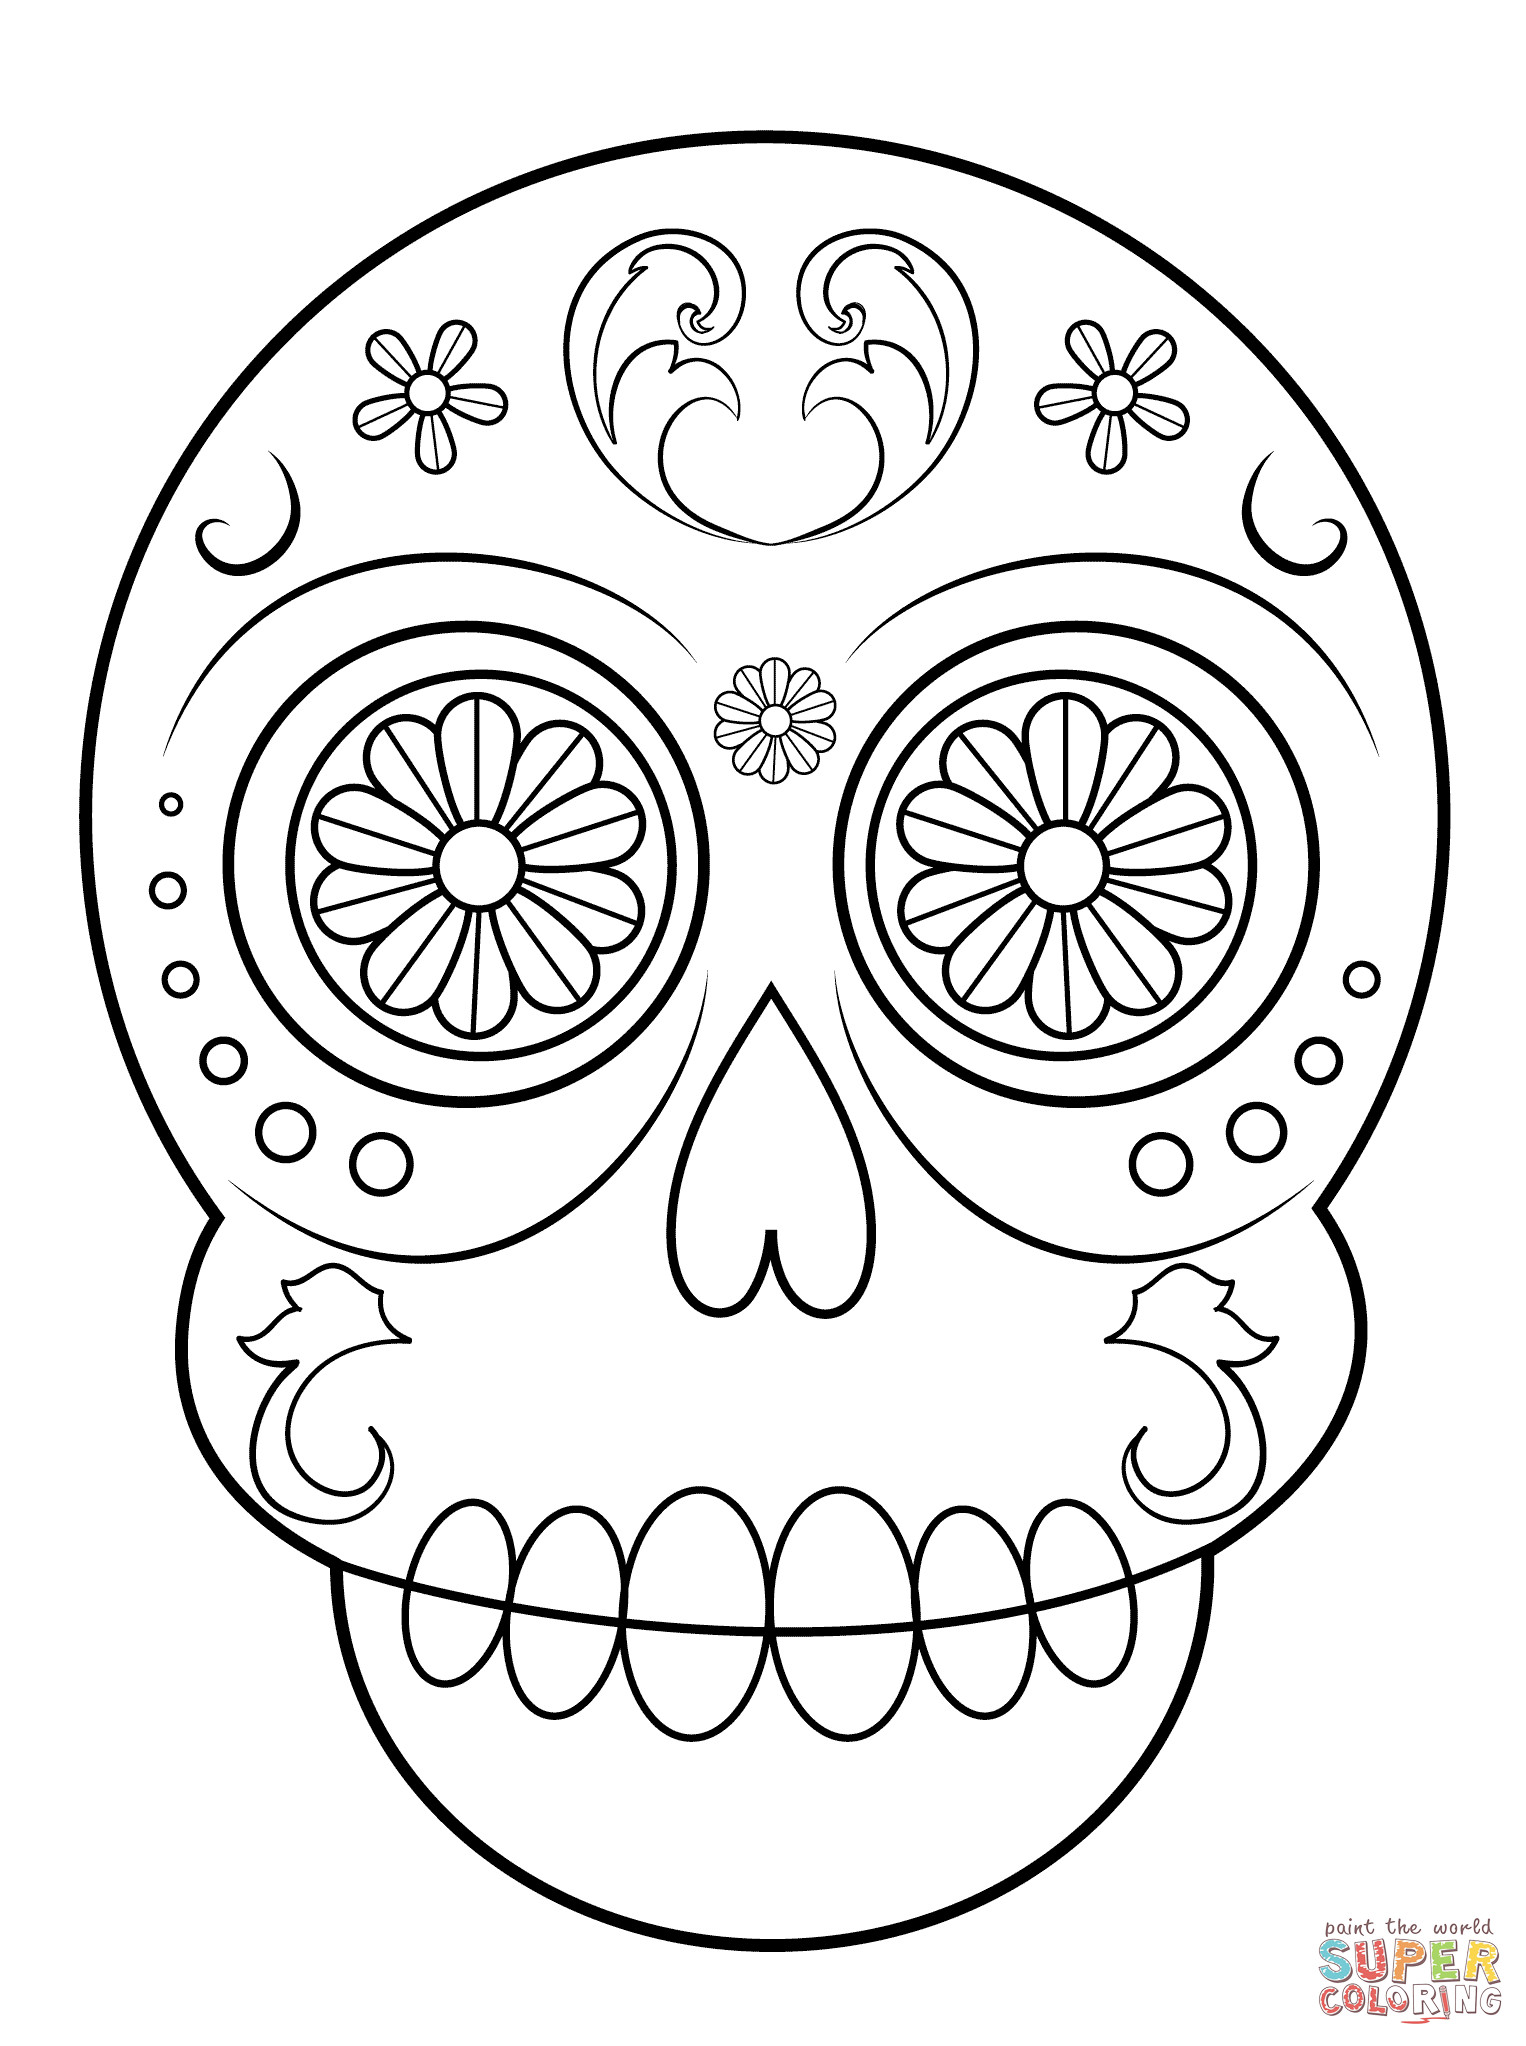 Sugar Skulls Coloring Pages
 Simple Sugar Skull coloring page